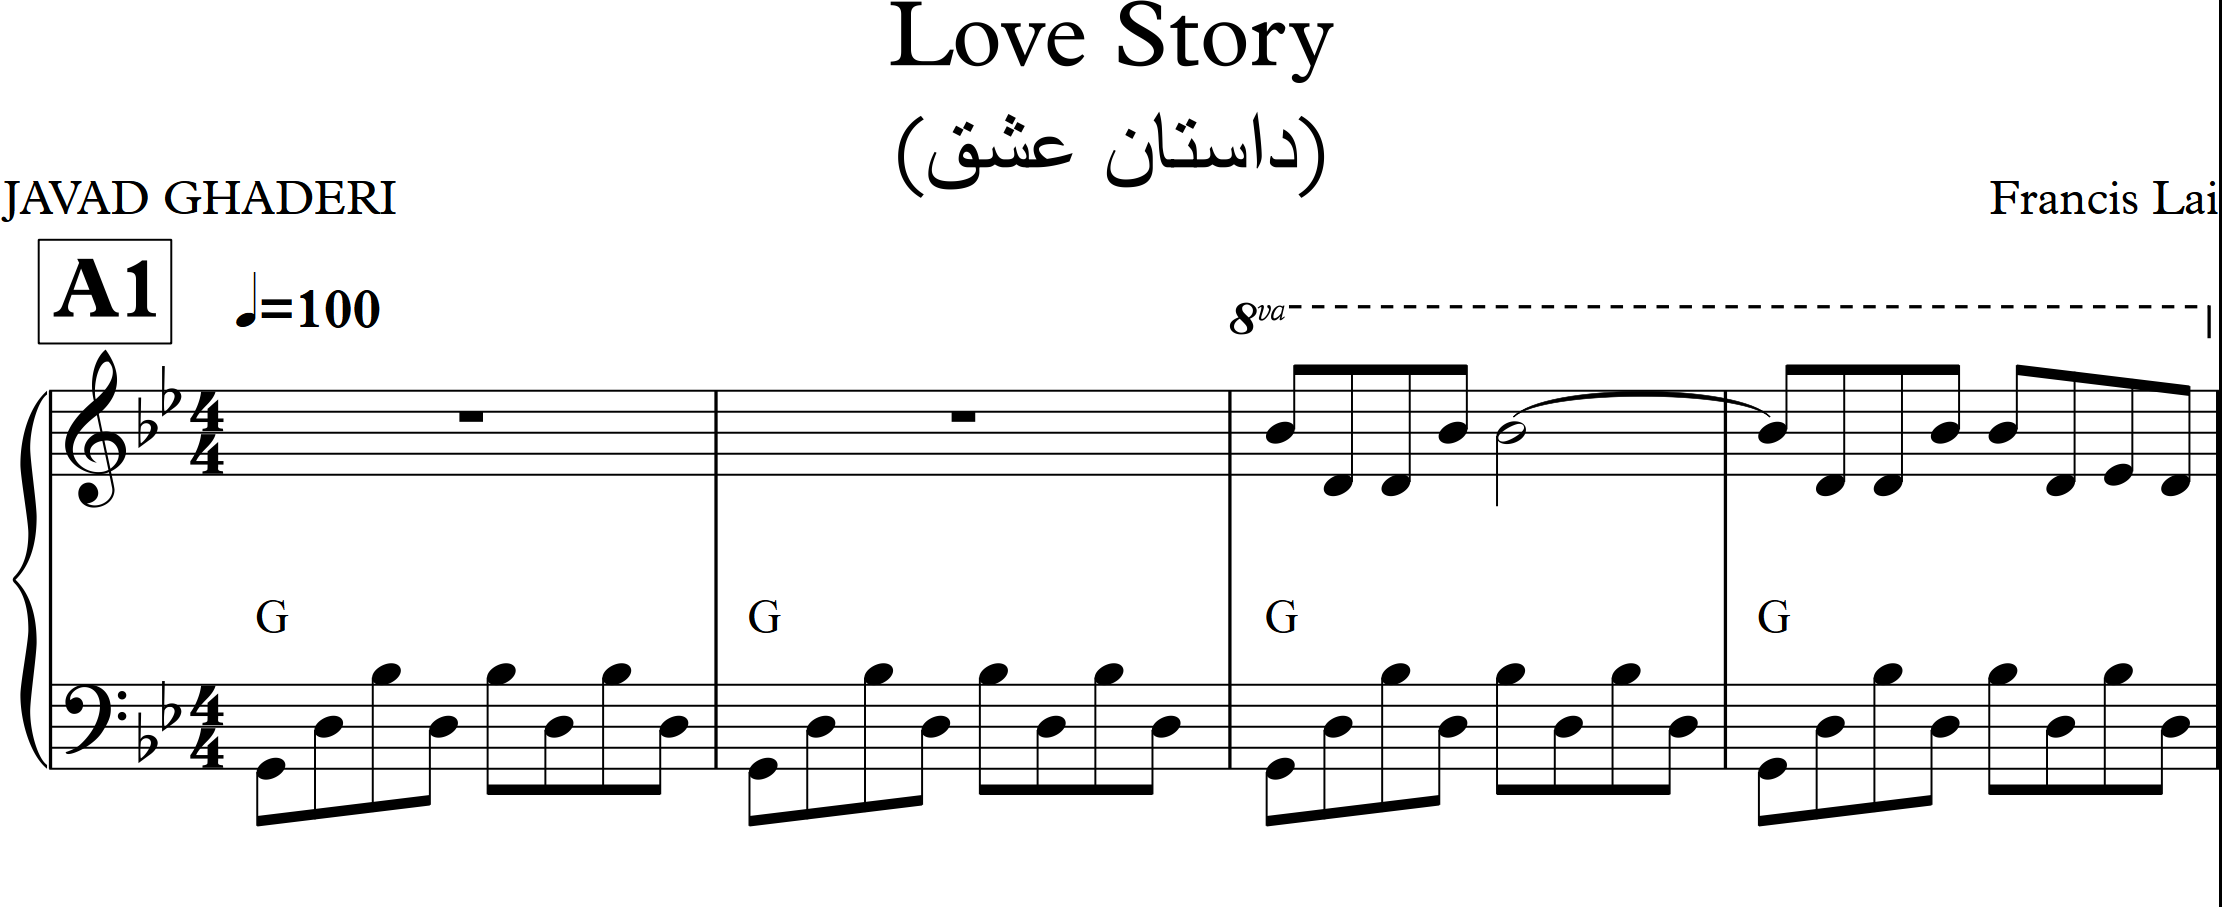 LOVE STORY (ساده سازی شده توسط جواد قادری )